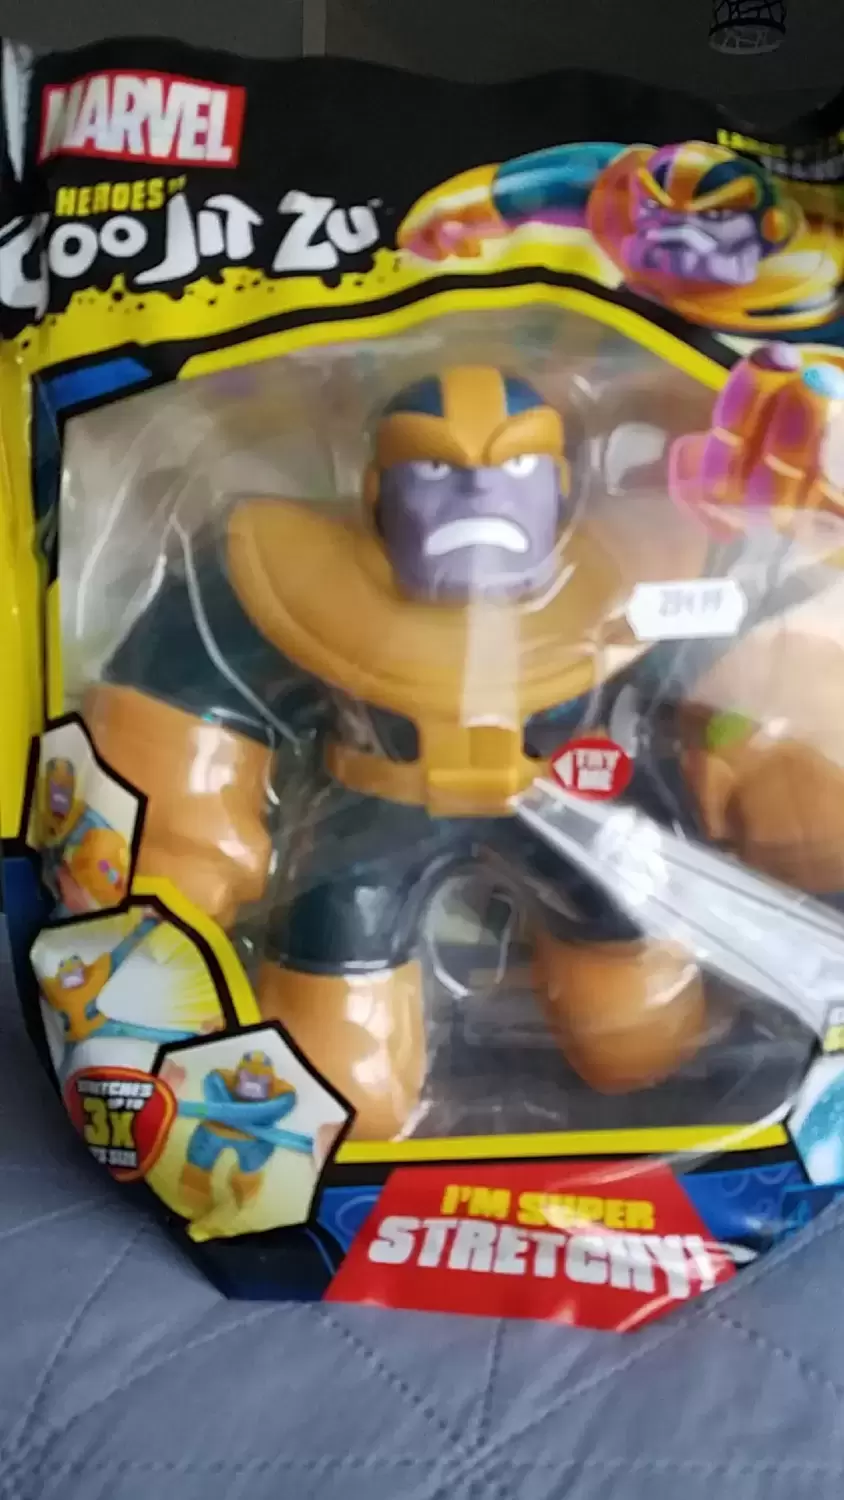 Heroes of Goo Jit Zu - Marvel - Thanos